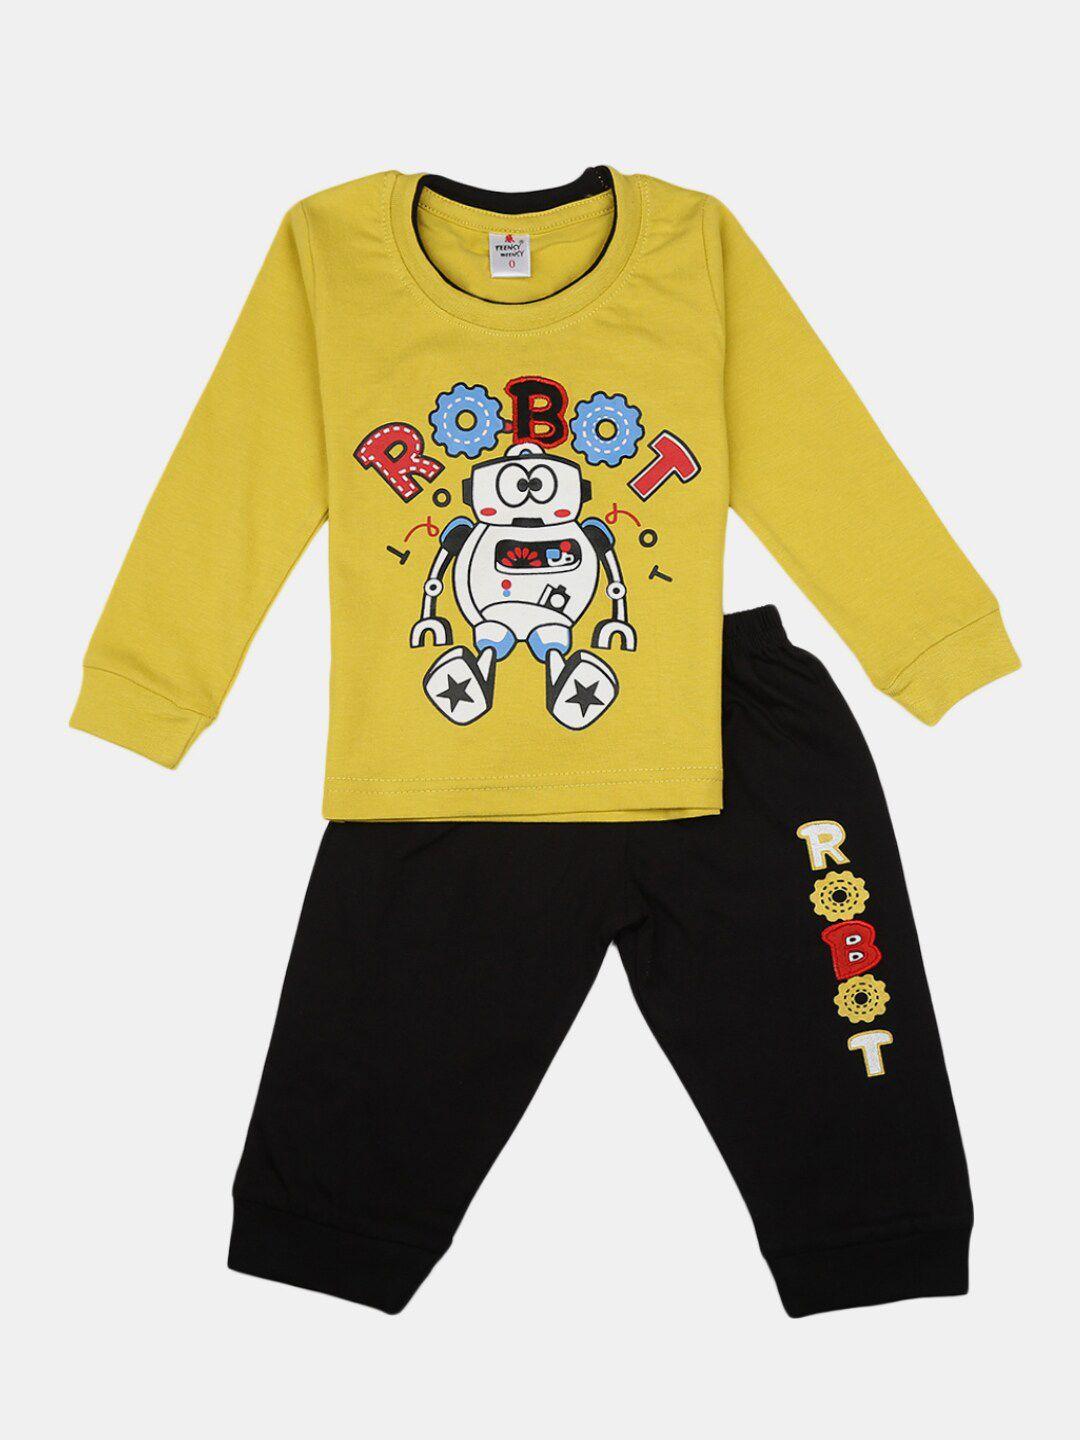 v-mart unisex kids yellow & black cotton printed t-shirt with pyjamas